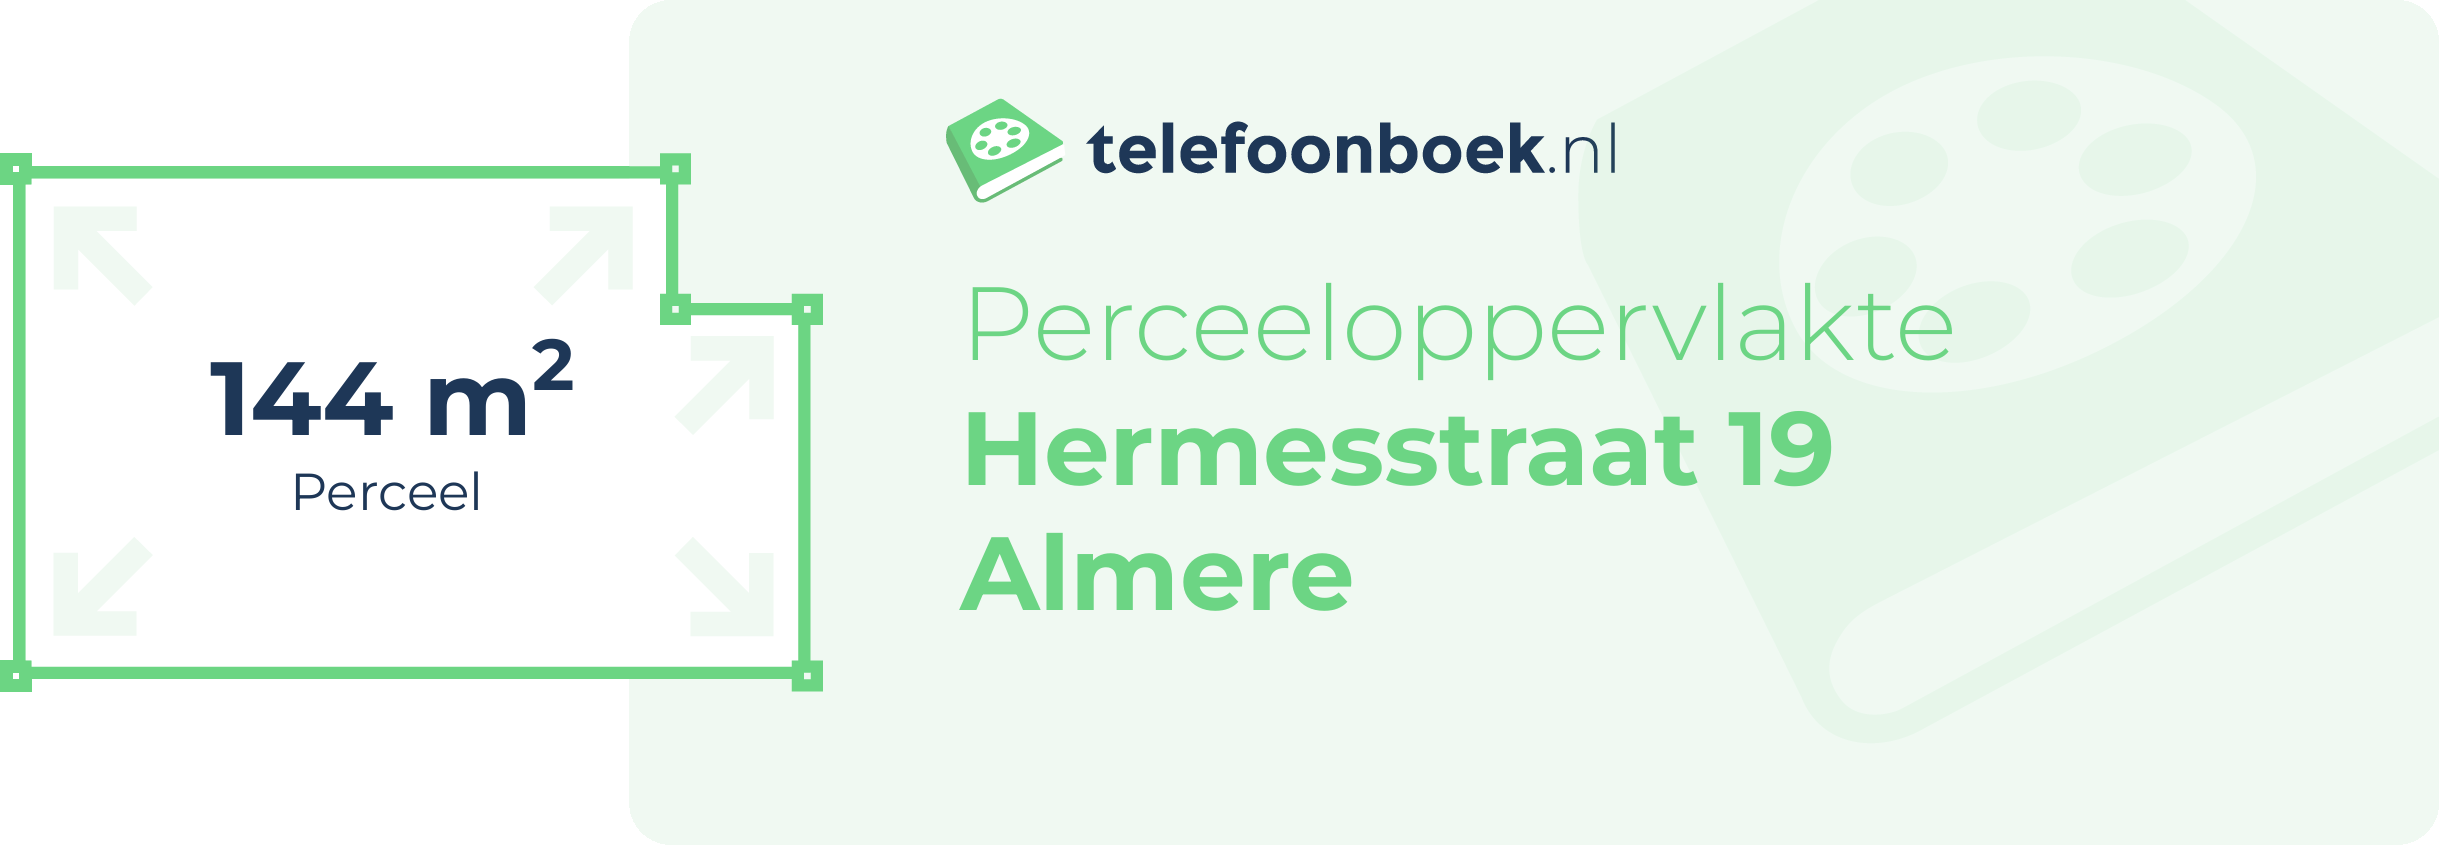 Perceeloppervlakte Hermesstraat 19 Almere